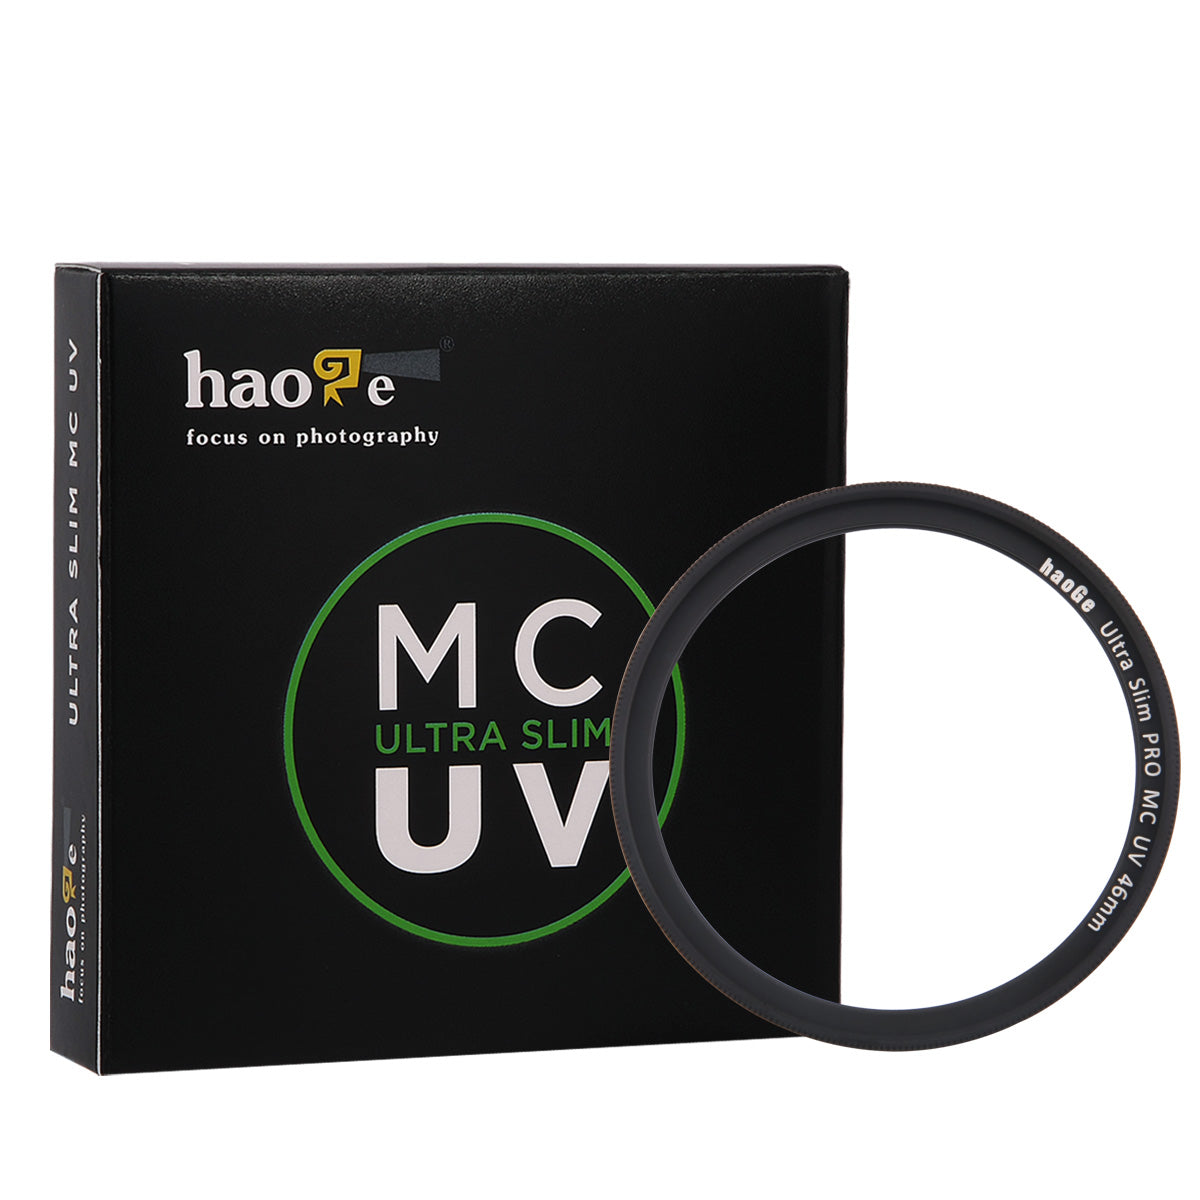 Haoge 46mm Ultra Slim MC UV Protection Multicoated Ultraviolet Lens Filter for Canon Nikon Sony Minolta Pentax Olympus Panasonic Leica Zeiss Tamron Digital Camera DSLR Lens